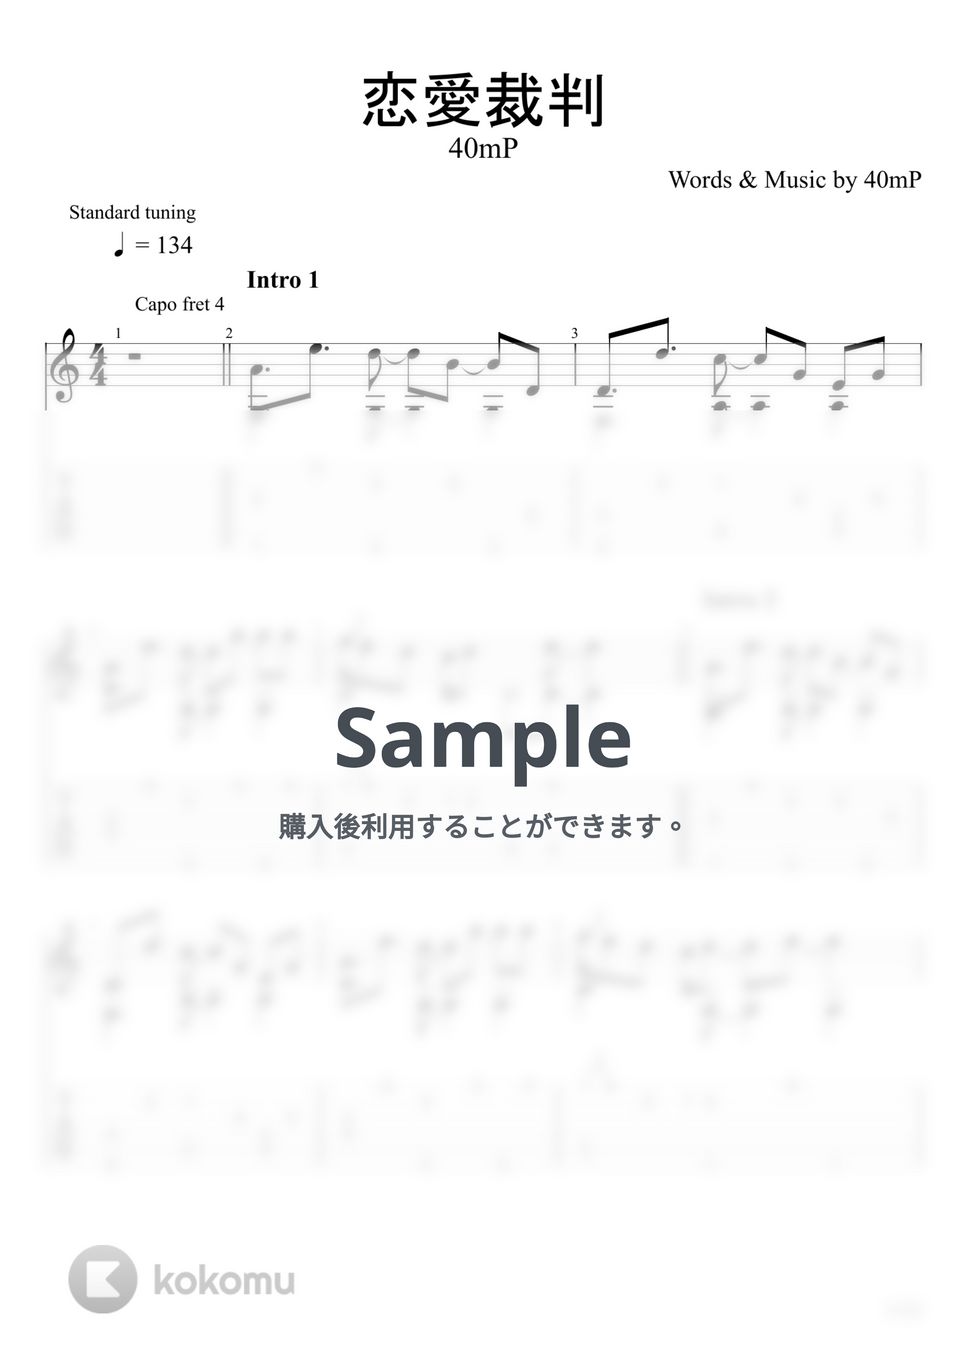 40mP - 恋愛裁判 (ソロギター) by u3danchou